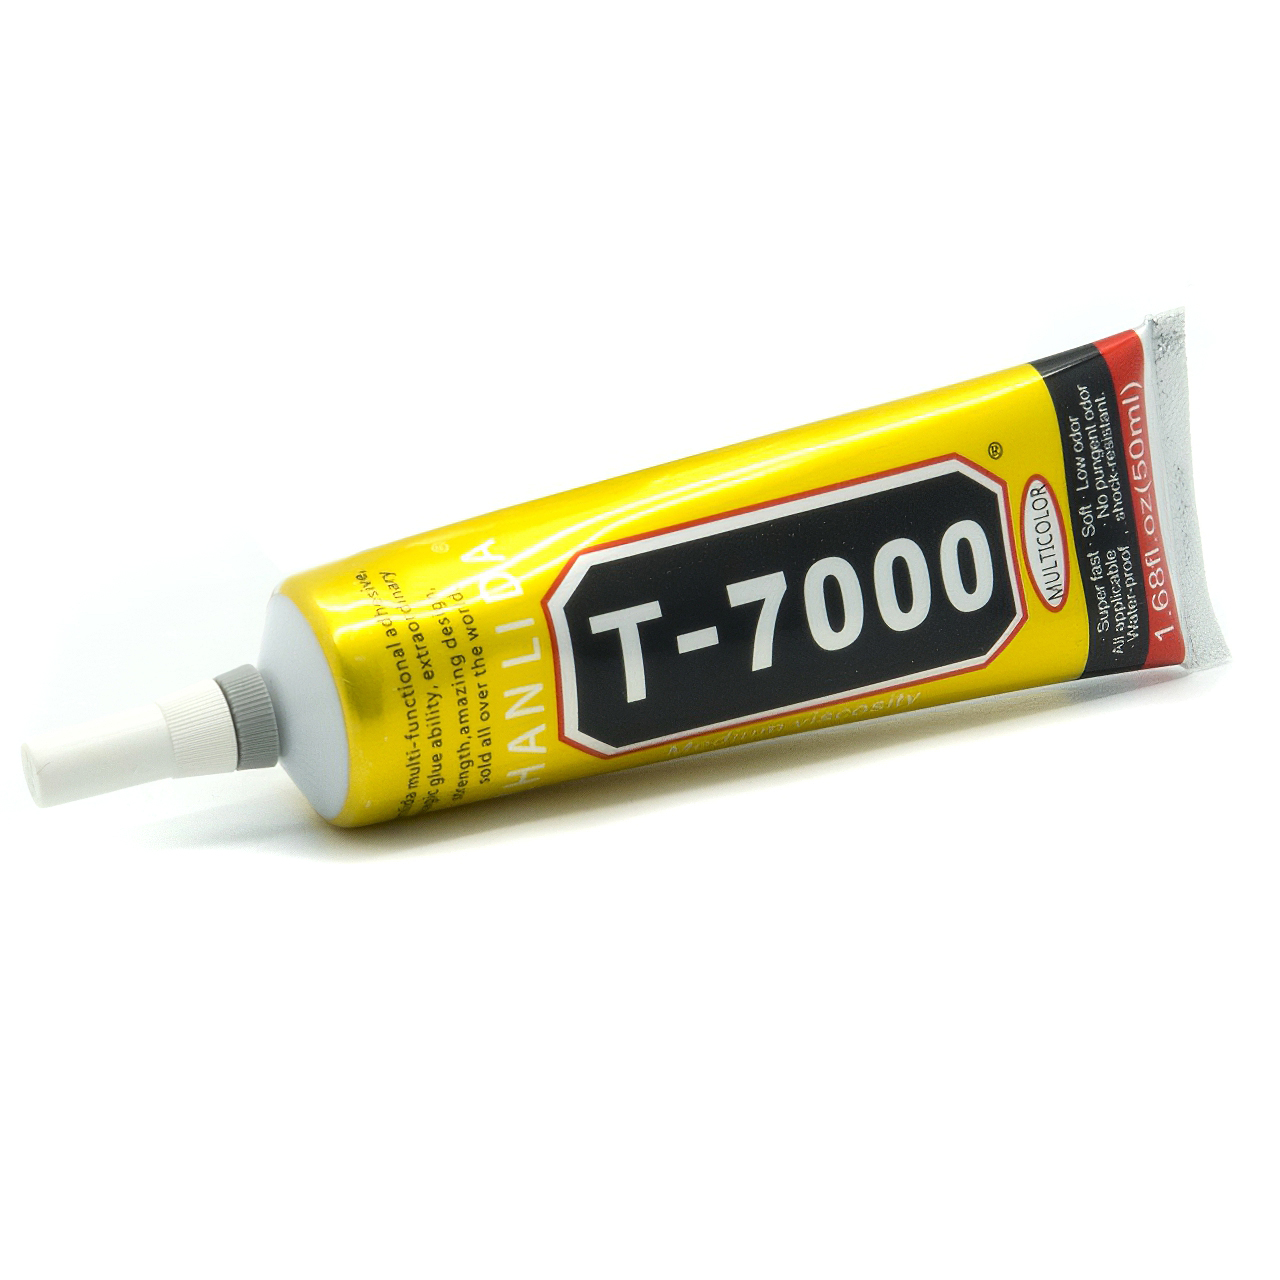 zhanlida-universal-glue-cellphone-repair-adhesives-t-7000-50ml